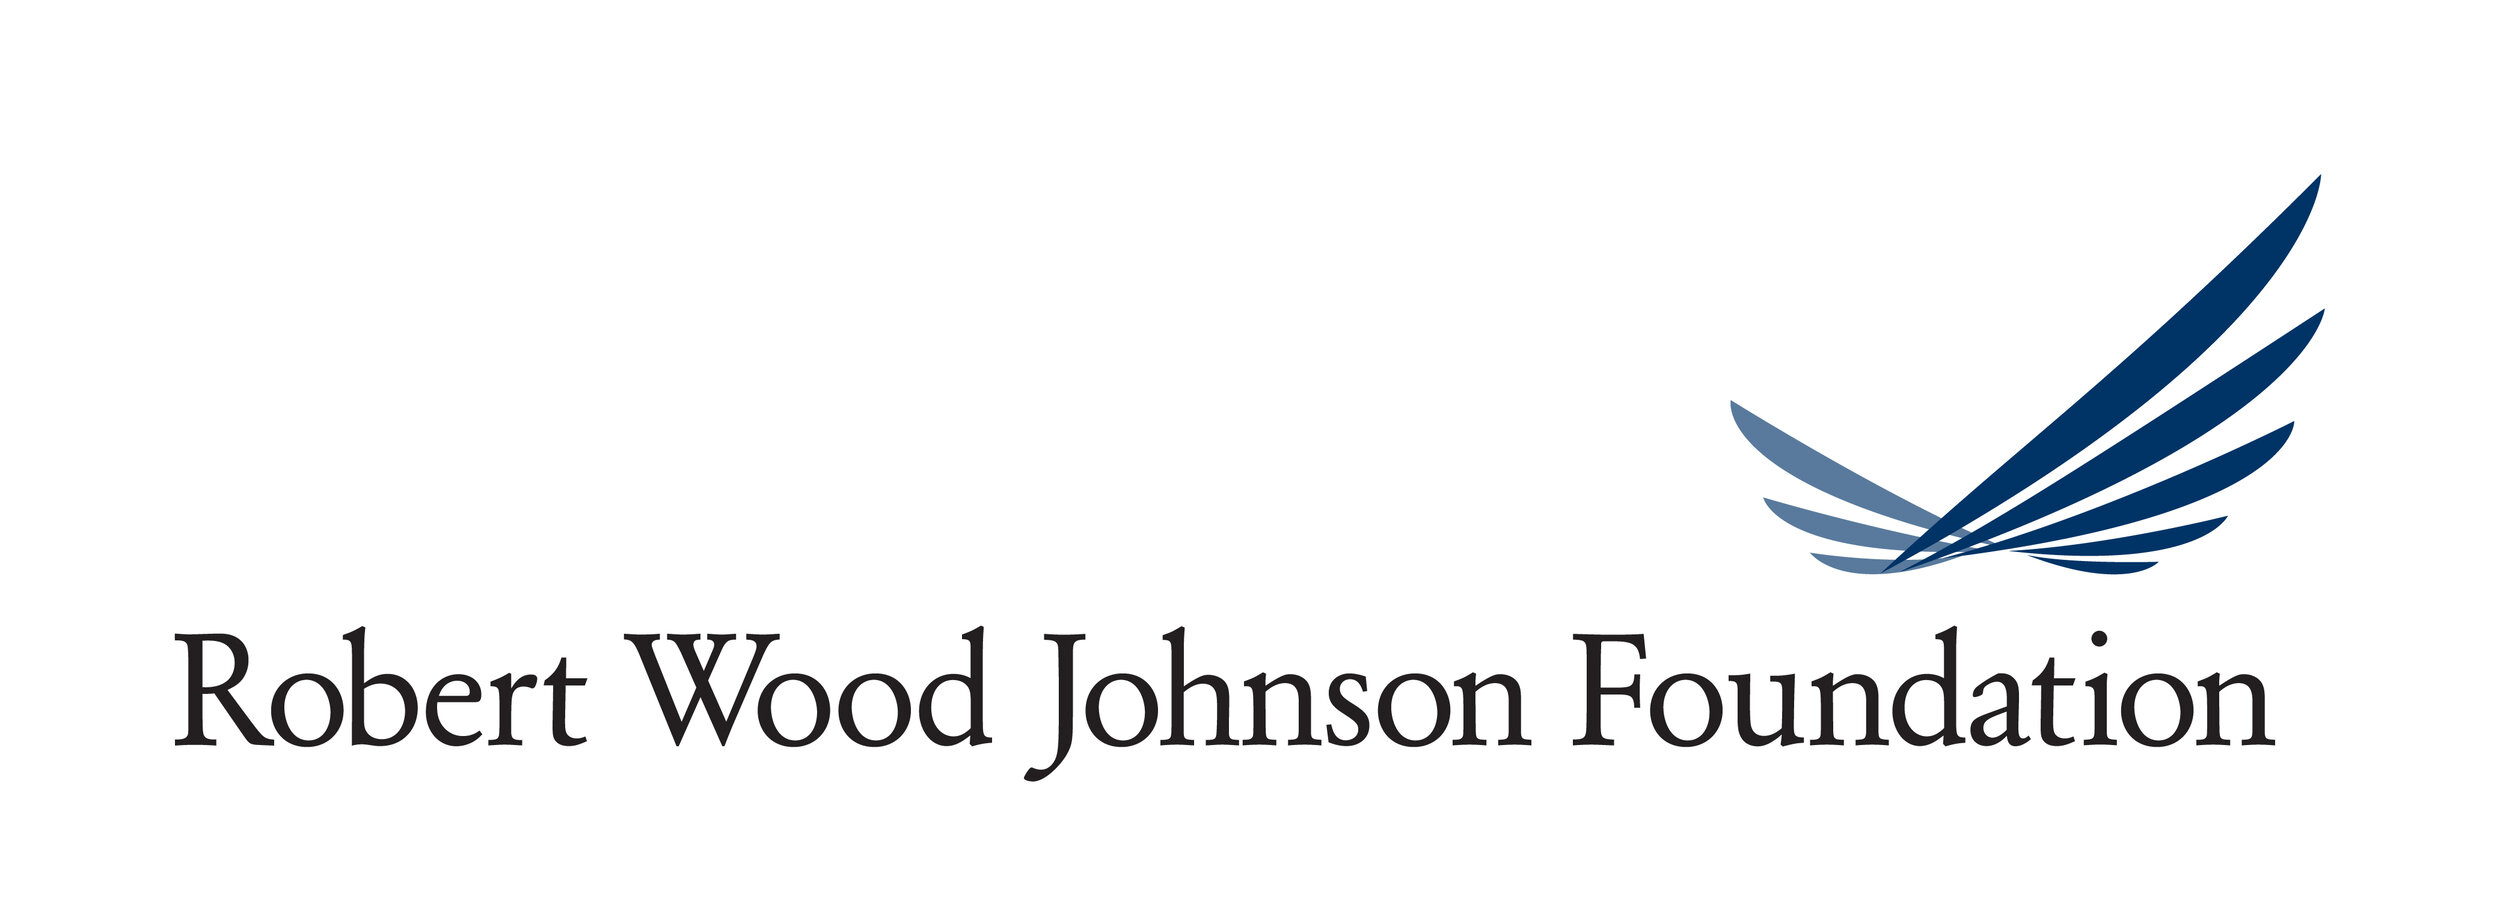 Robert Wood Johson Foundation (RWJF).jpg